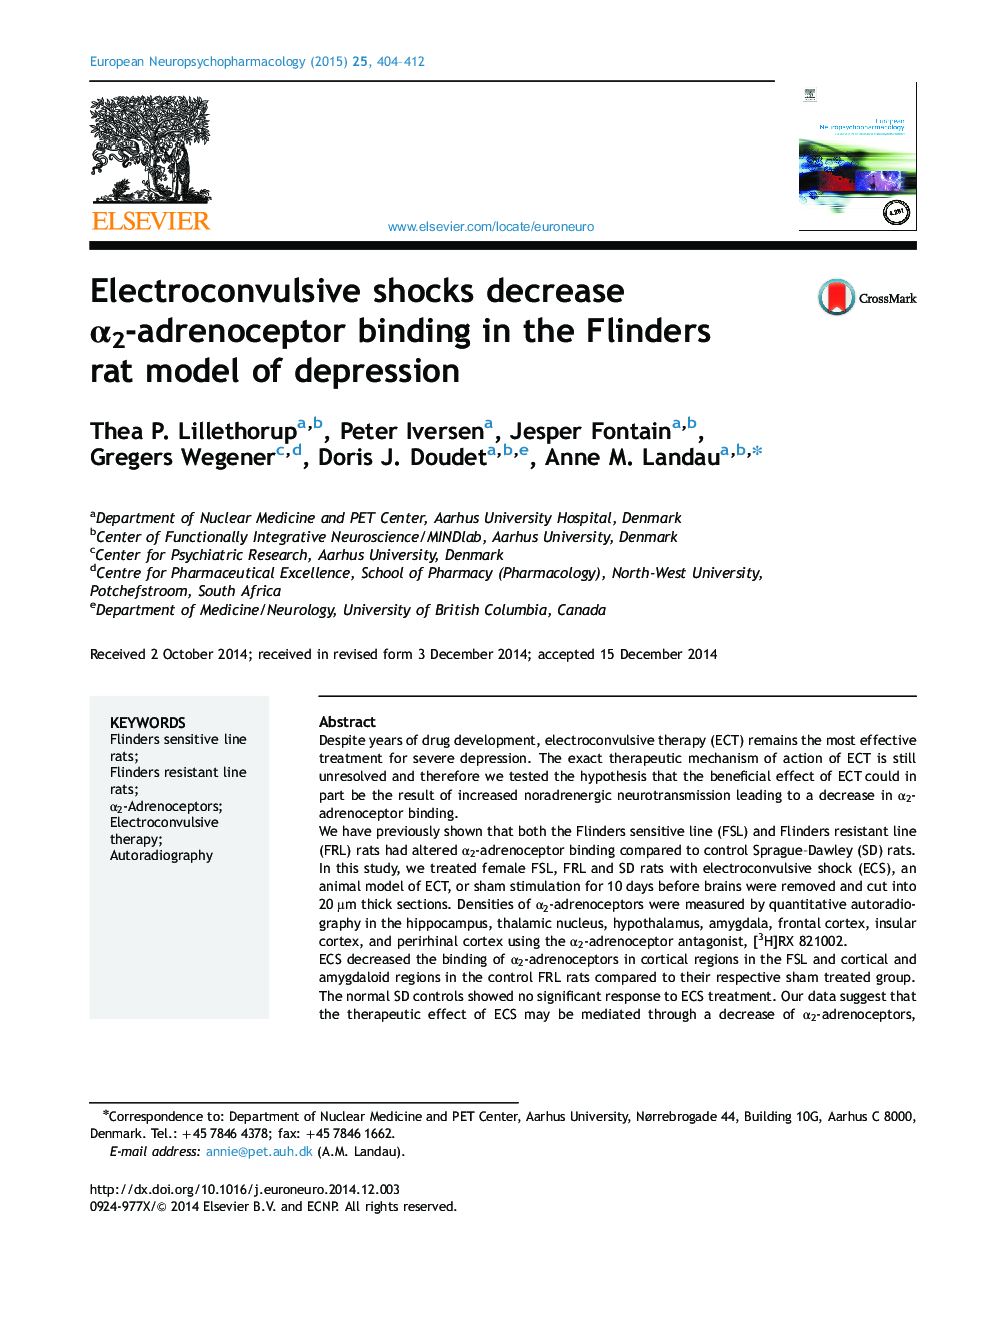 Electroconvulsive shocks decrease Î±2-adrenoceptor binding in the Flinders rat model of depression